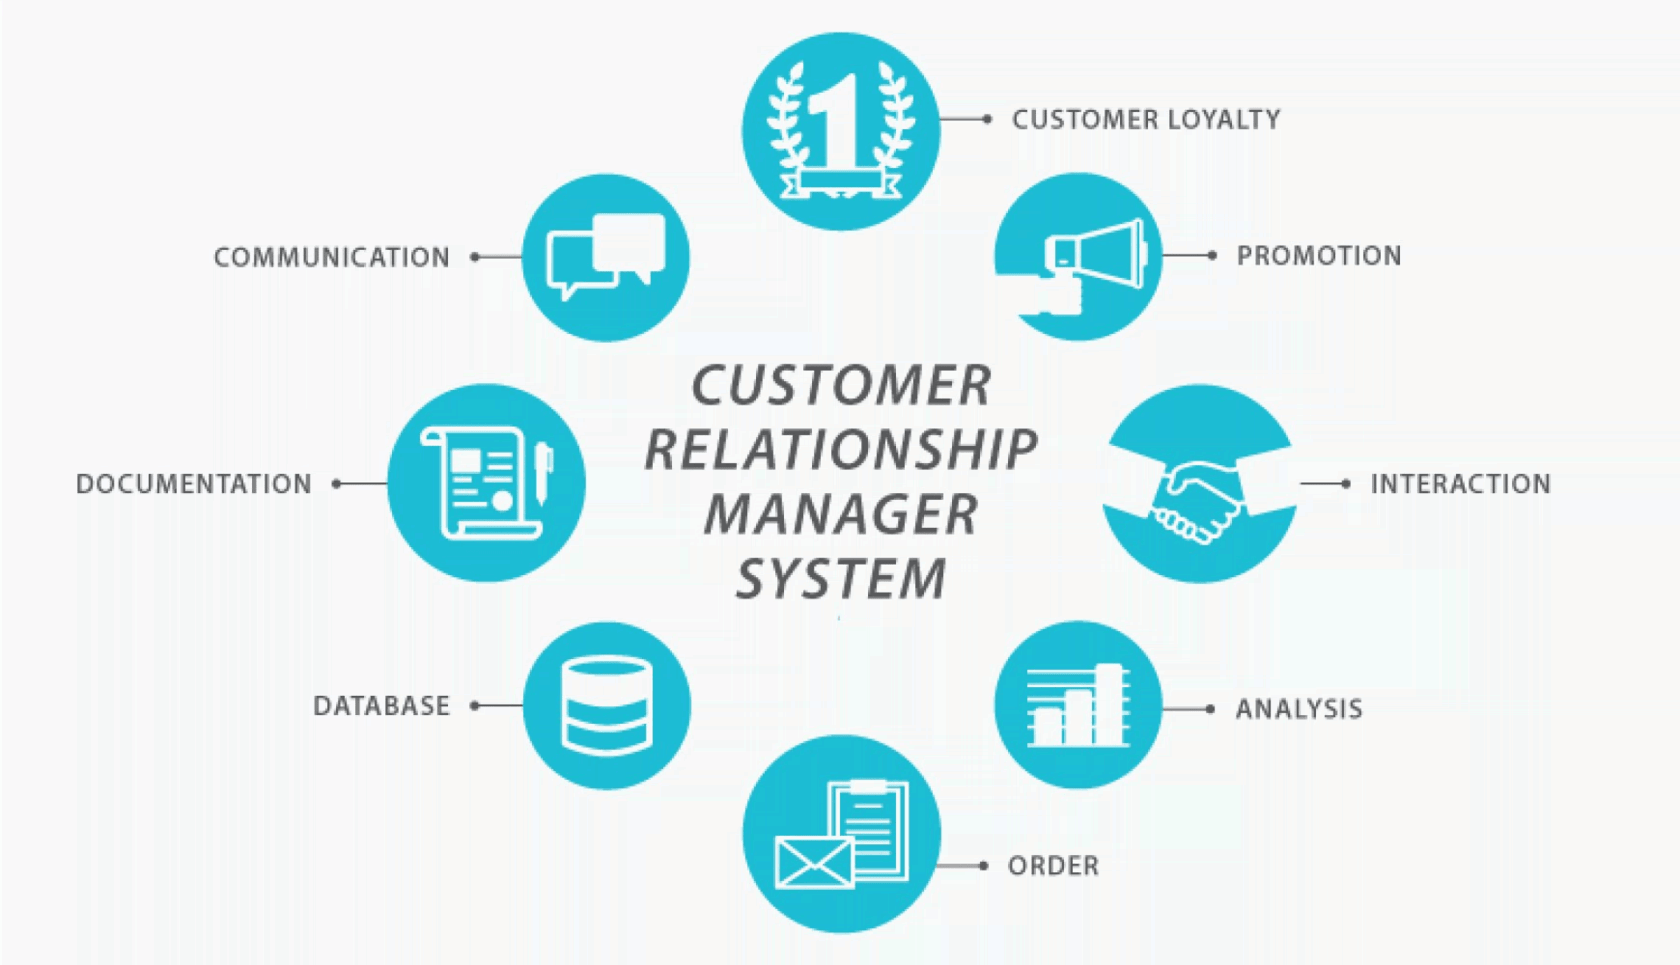 Customer relationship manager system: scheme of work